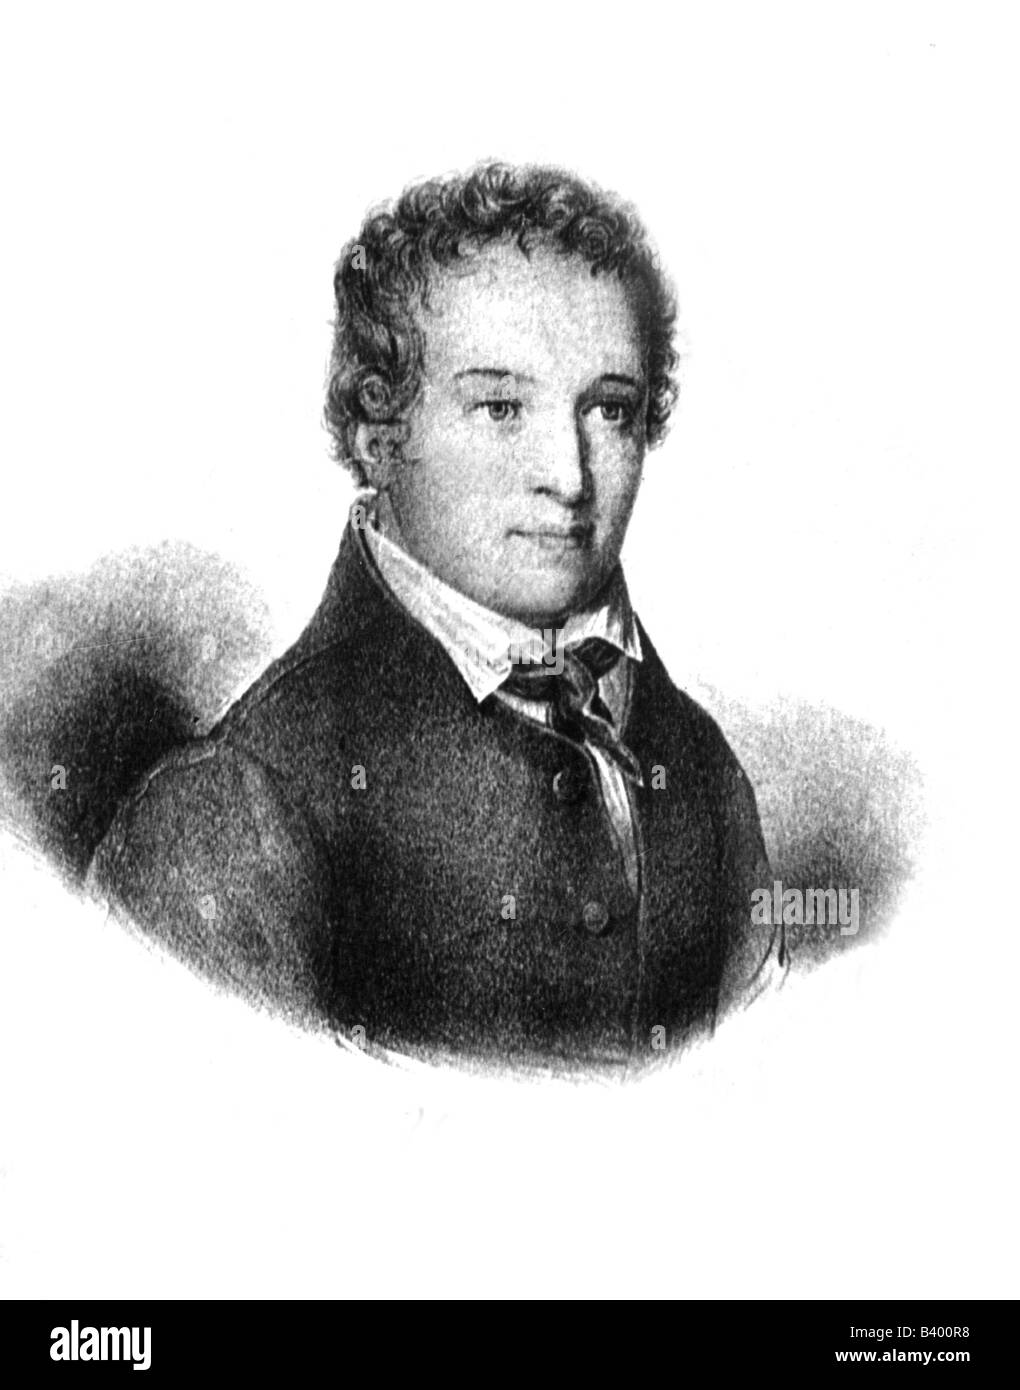 Hauser, Kaspar, 30.4.1812 - 17.12.1833, German foundling, portrait, , Stock Photo